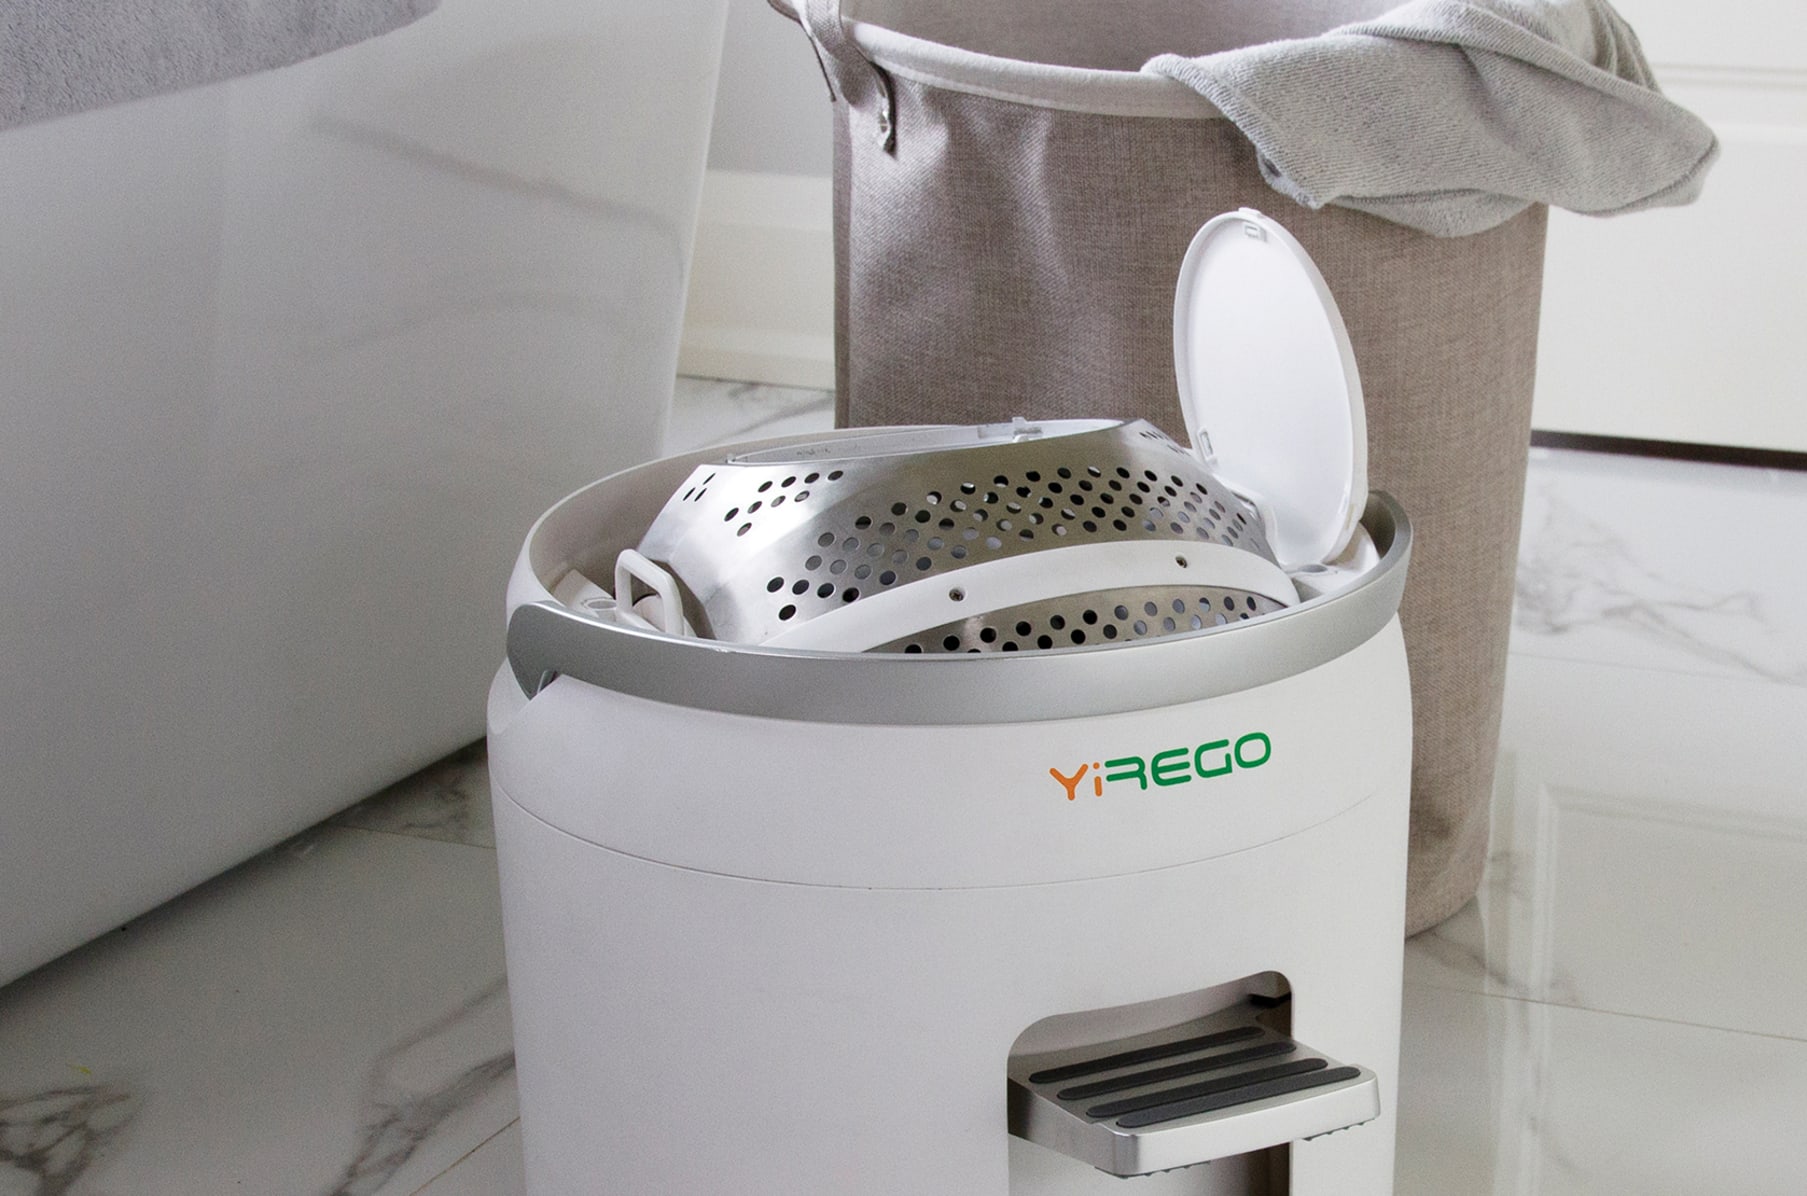 yirego washing machine price